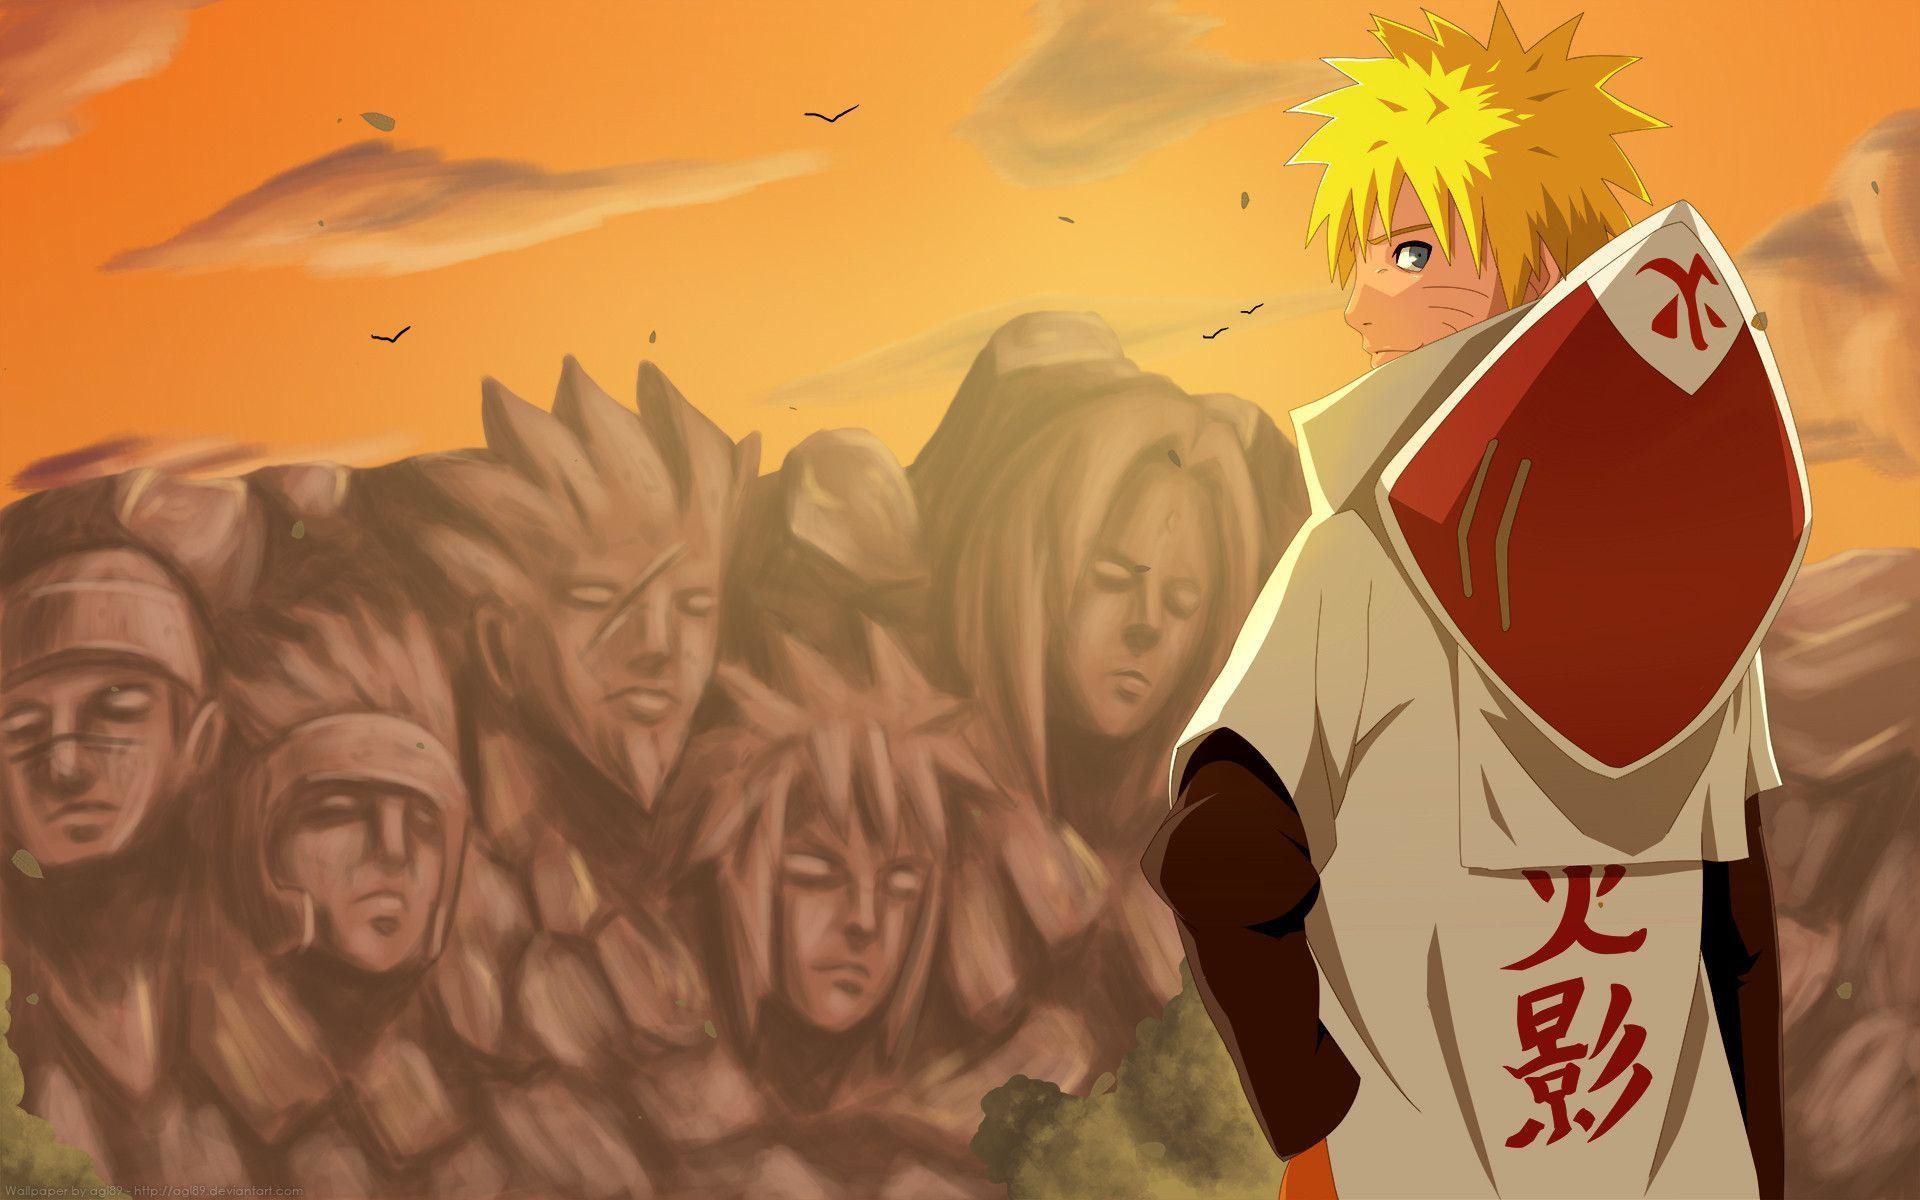 Top 999+ Naruto Shippuden Wallpaper Full HD, 4K✓Free to Use